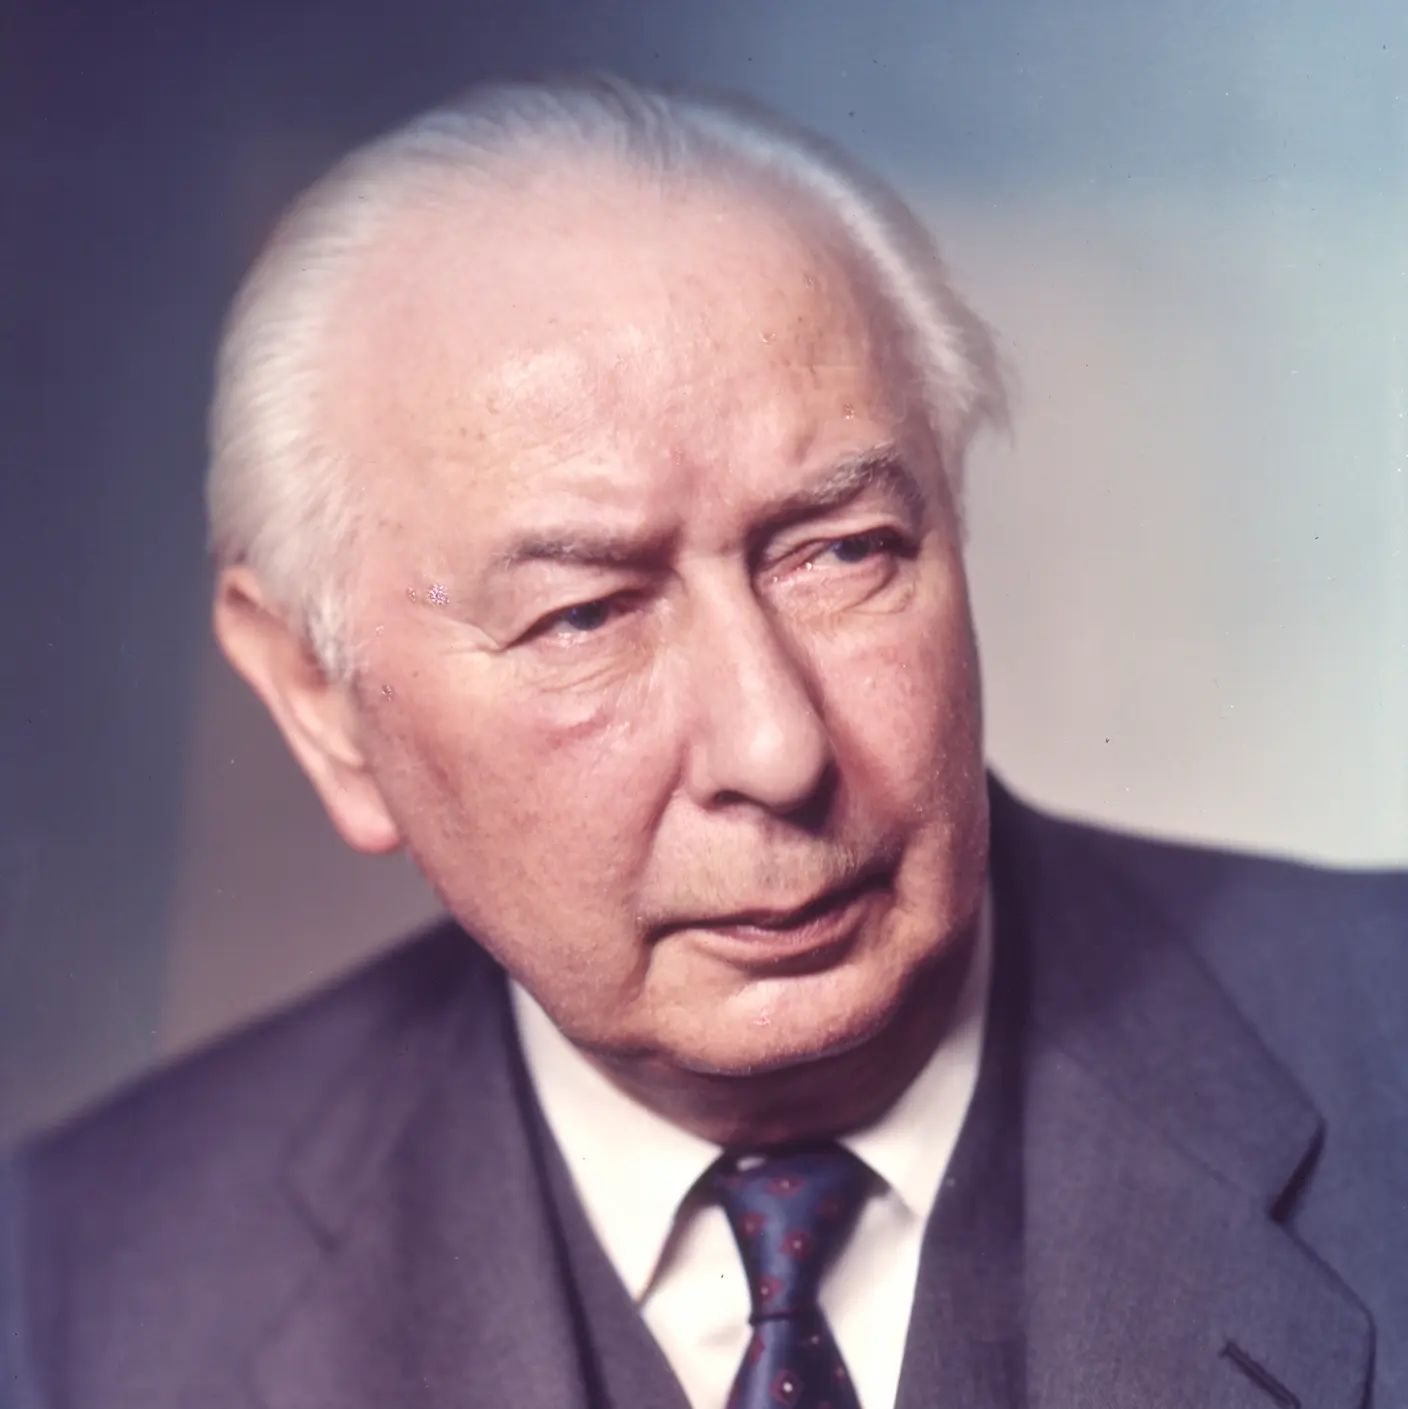 Bundespräsident Theodor Heuss im Porträt